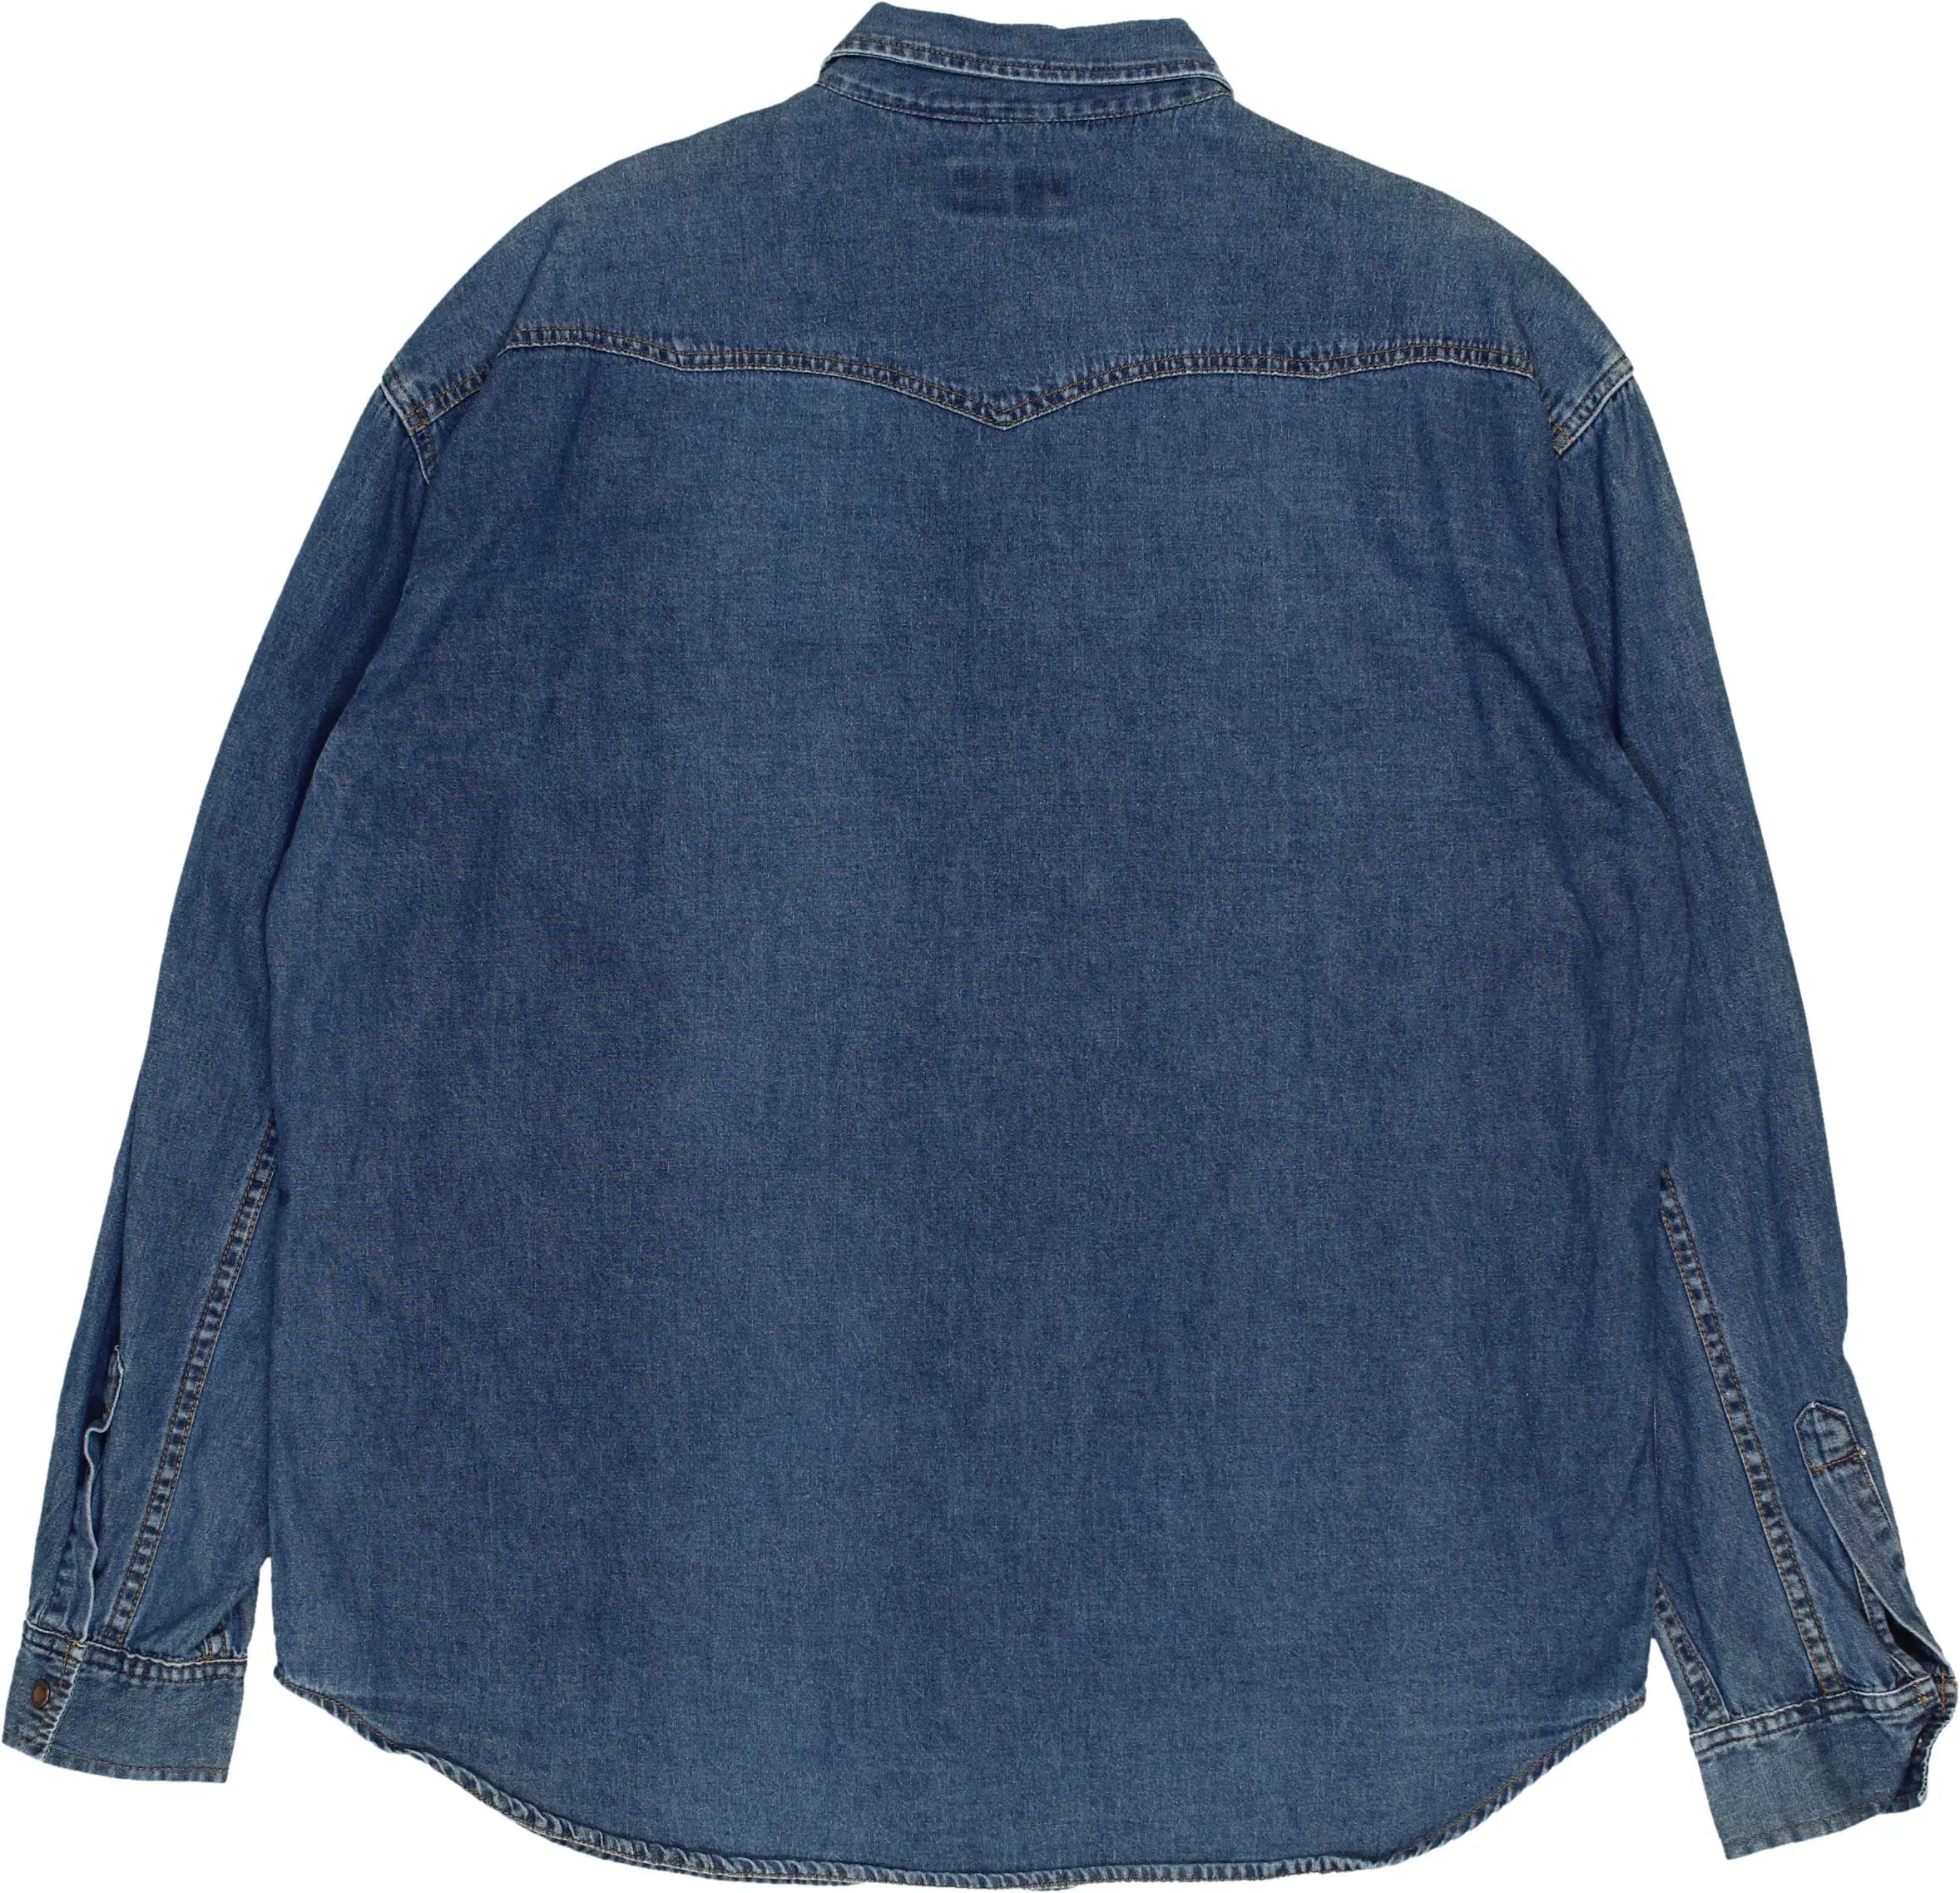 Montana - Denim Shirt- ThriftTale.com - Vintage and second handclothing